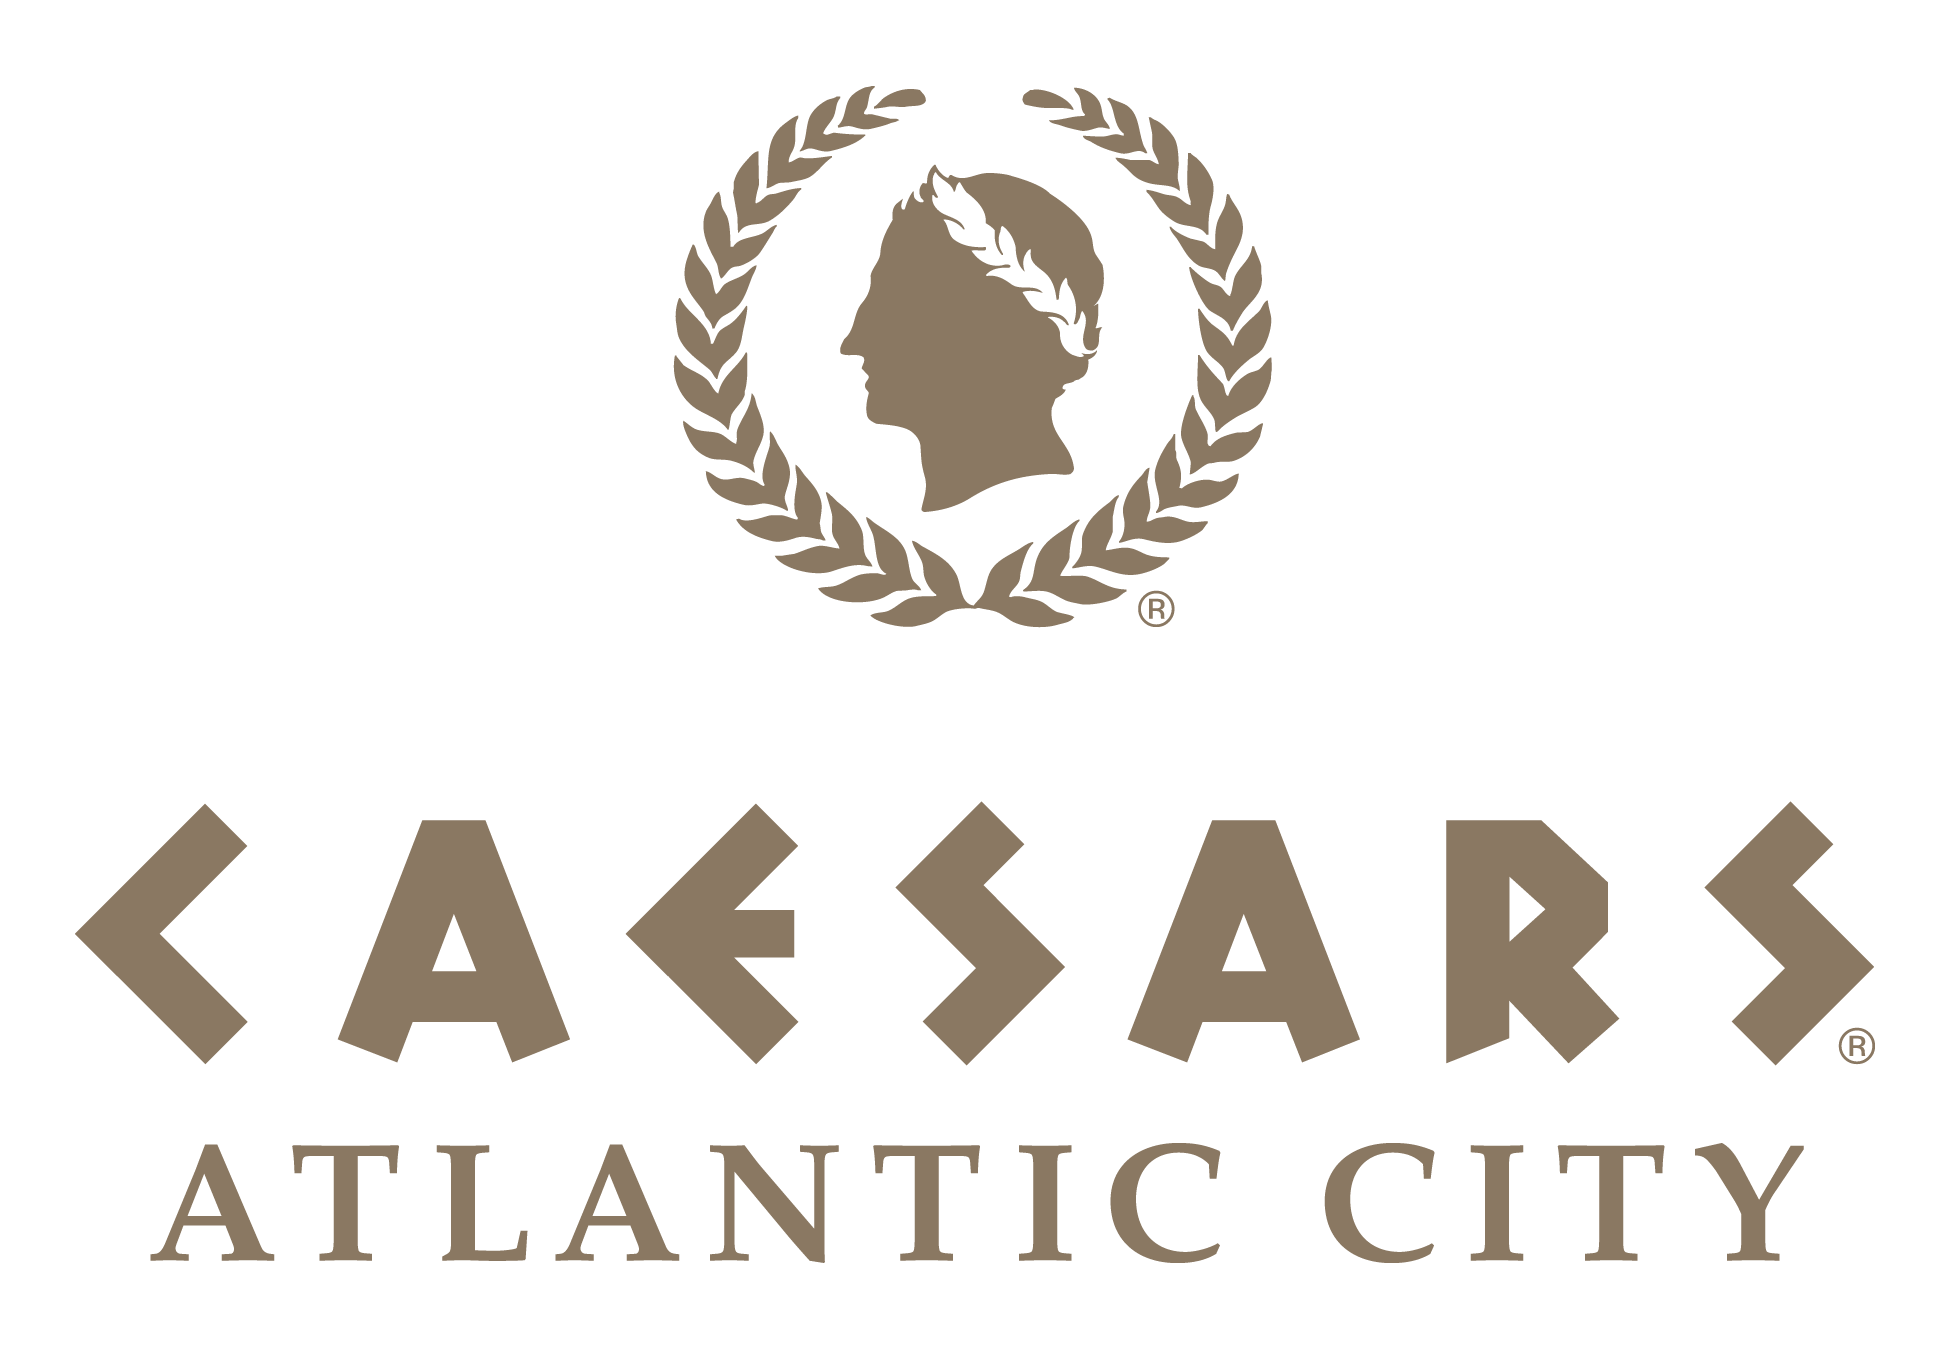 Alanic City Caesars Logo - Caesars Atlantic City Photo Gallery